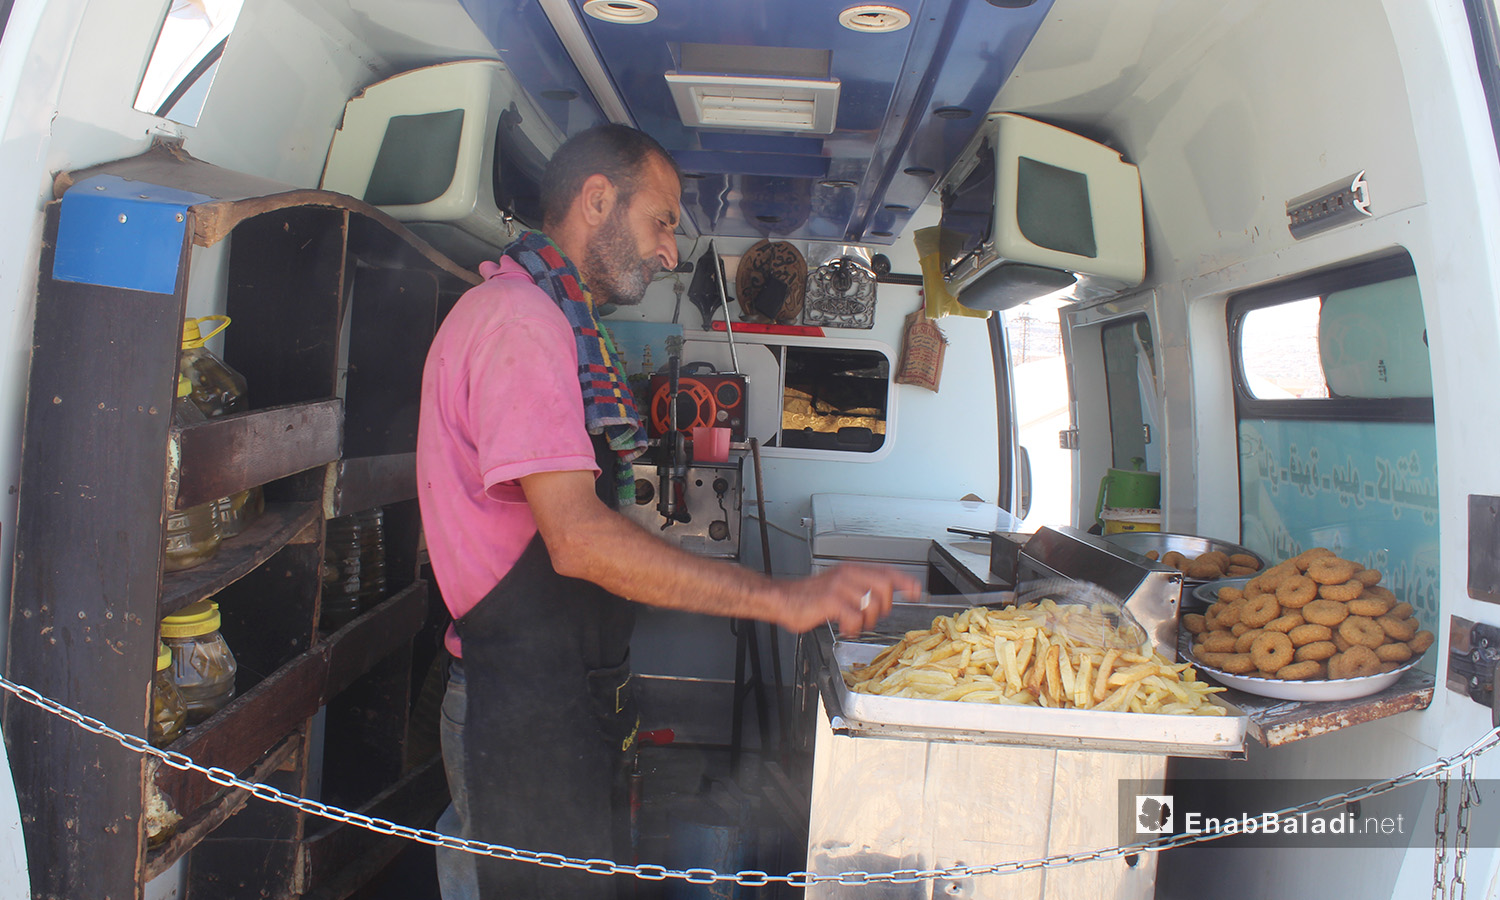 Shaher al-Asaad converted his vehicle into a shop selling sandwiches in Sarmada – September 2020 (Enab Baladi / Iyad Abdel Jawad)